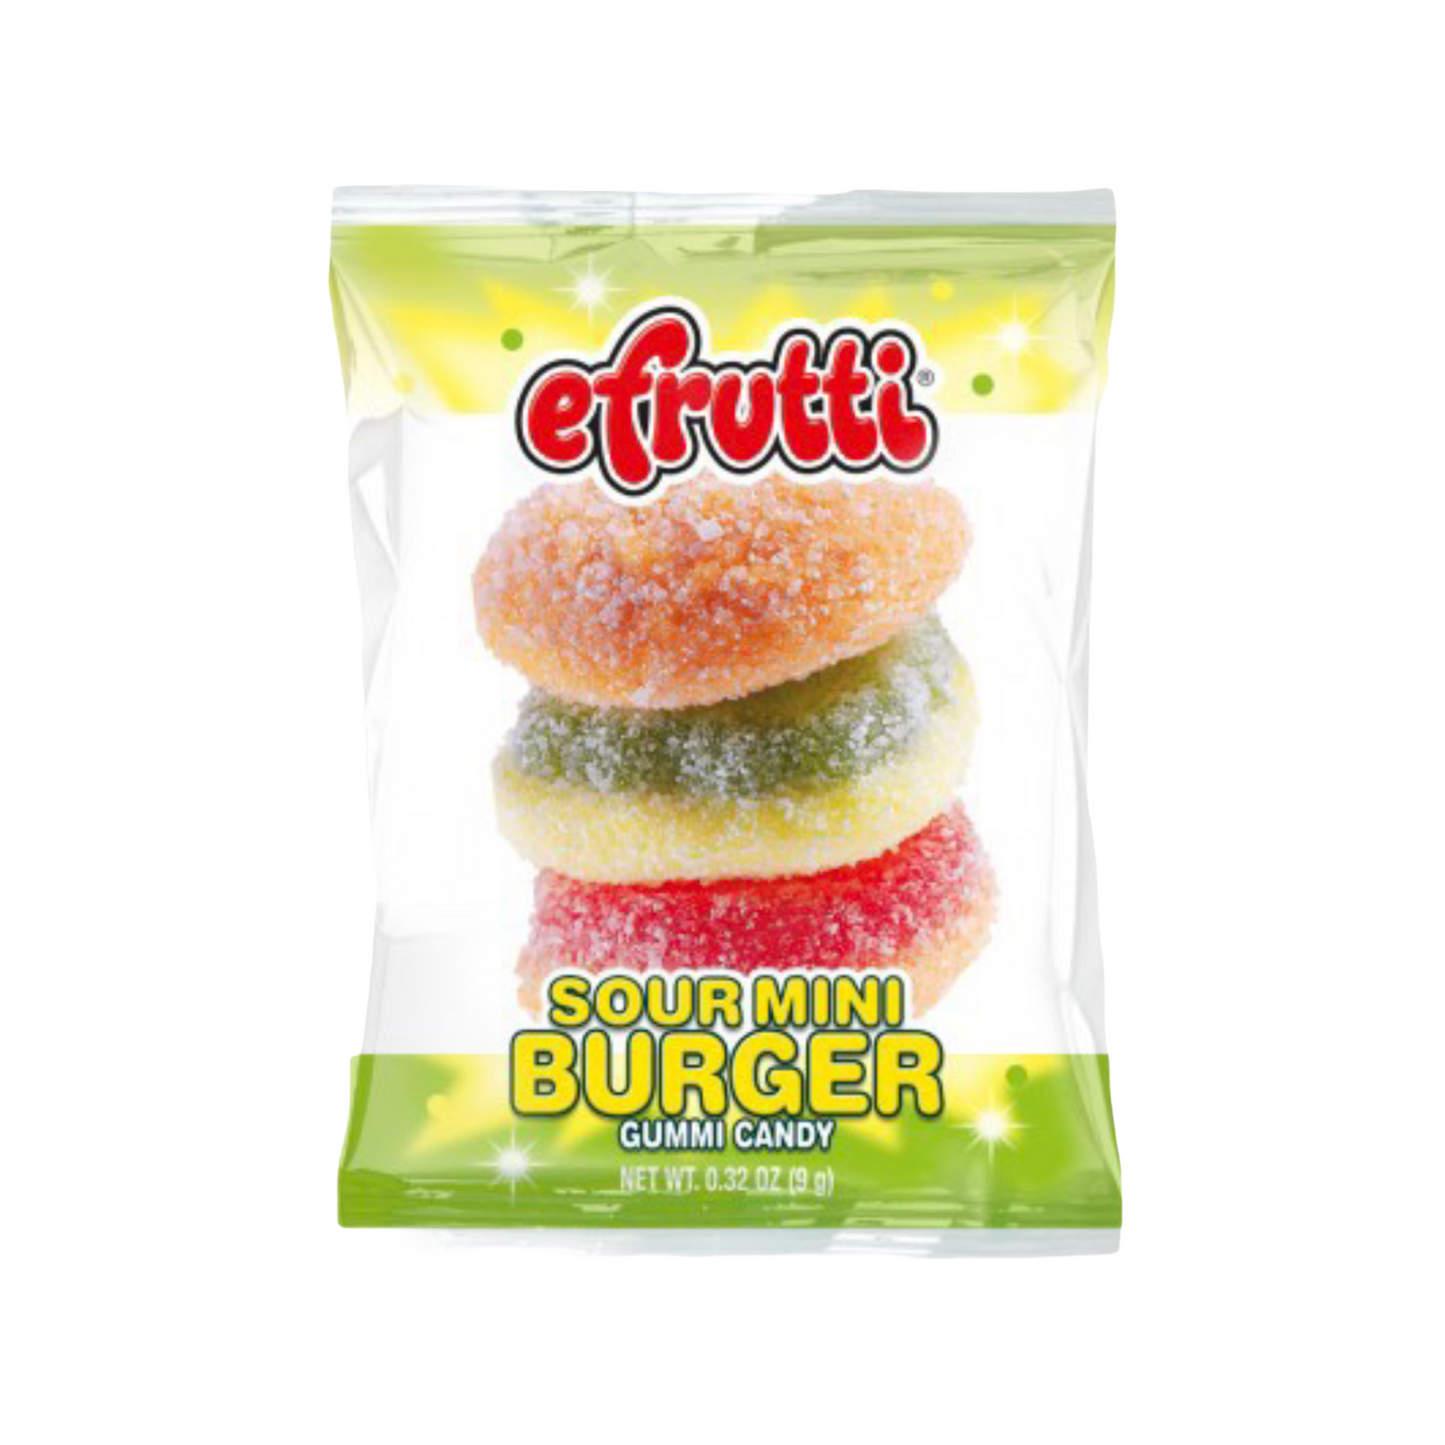 eFrutti Gummi Candy Sour Mini Burger 0.32oz (9g)